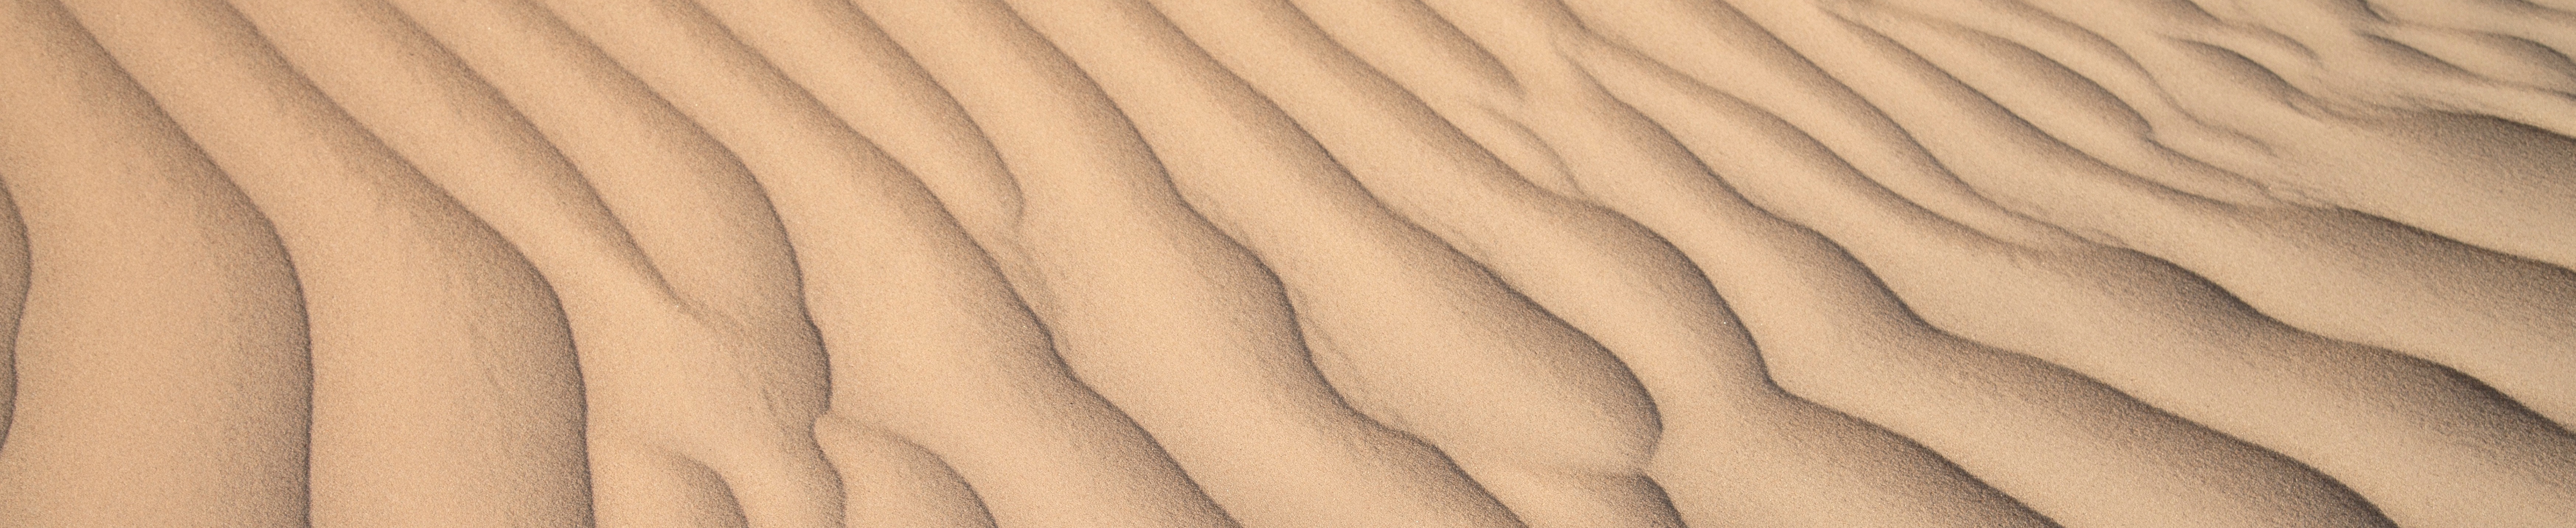 convnet bp sand